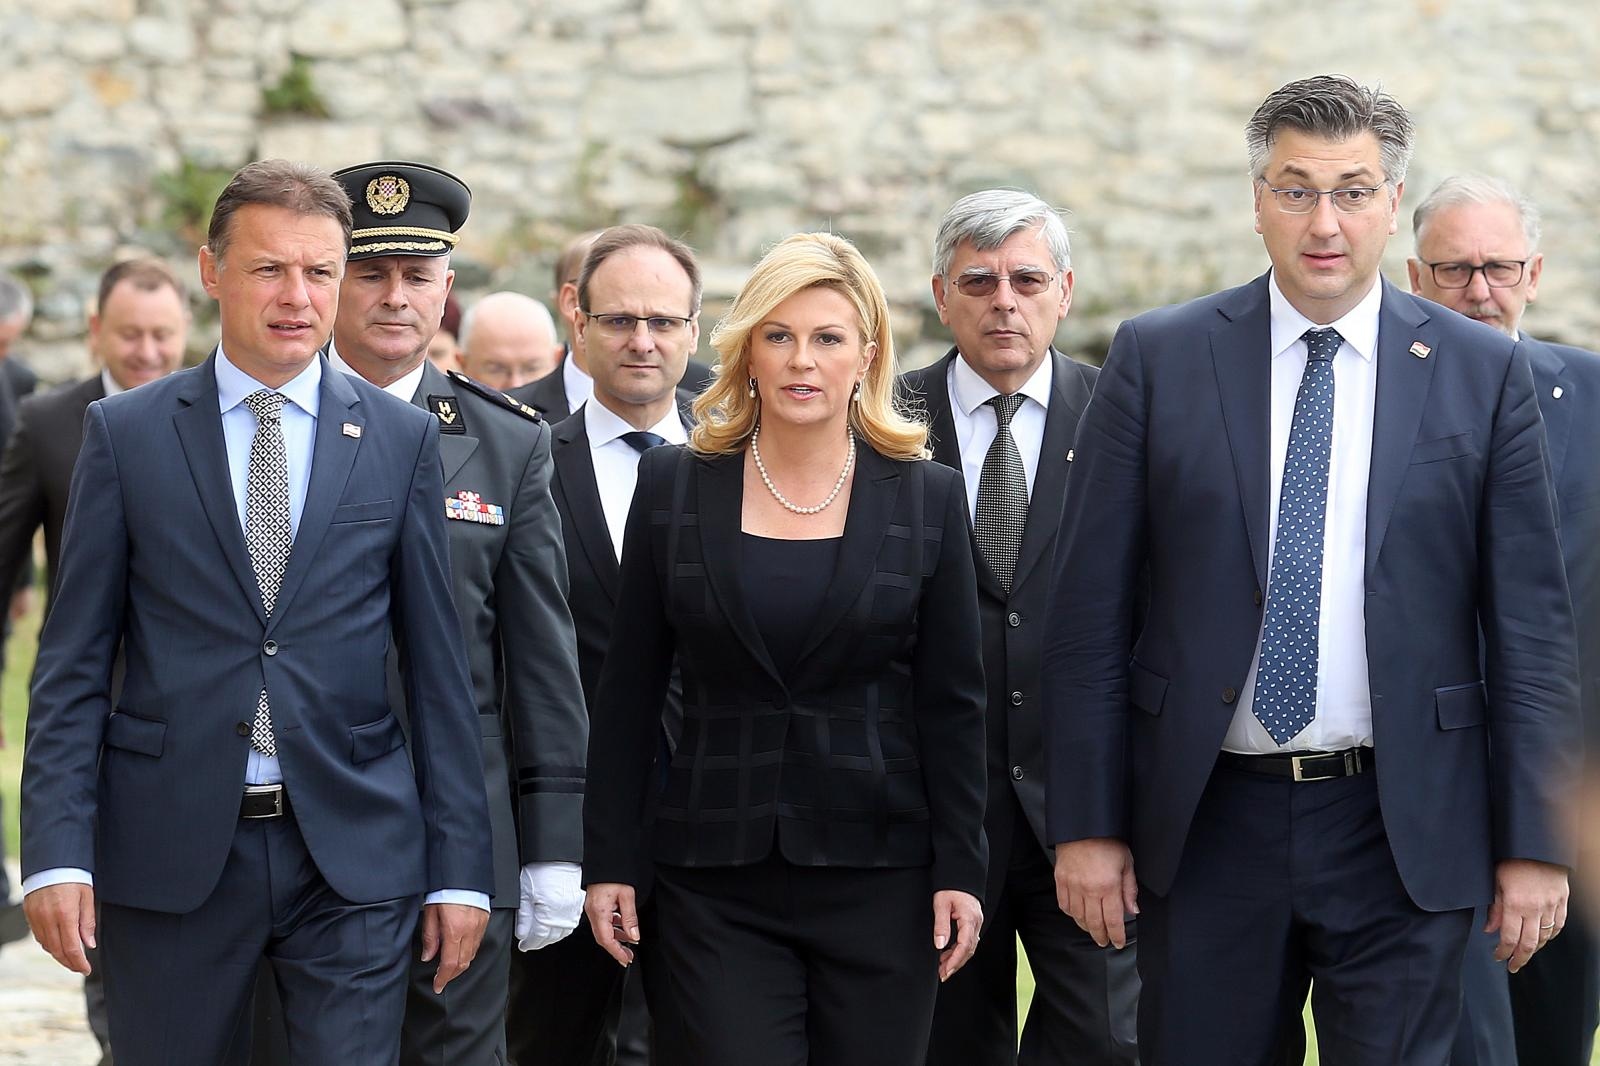 Zagreb: Državni vrh poklonio se na Oltaru domovine povodom Dana državnosti